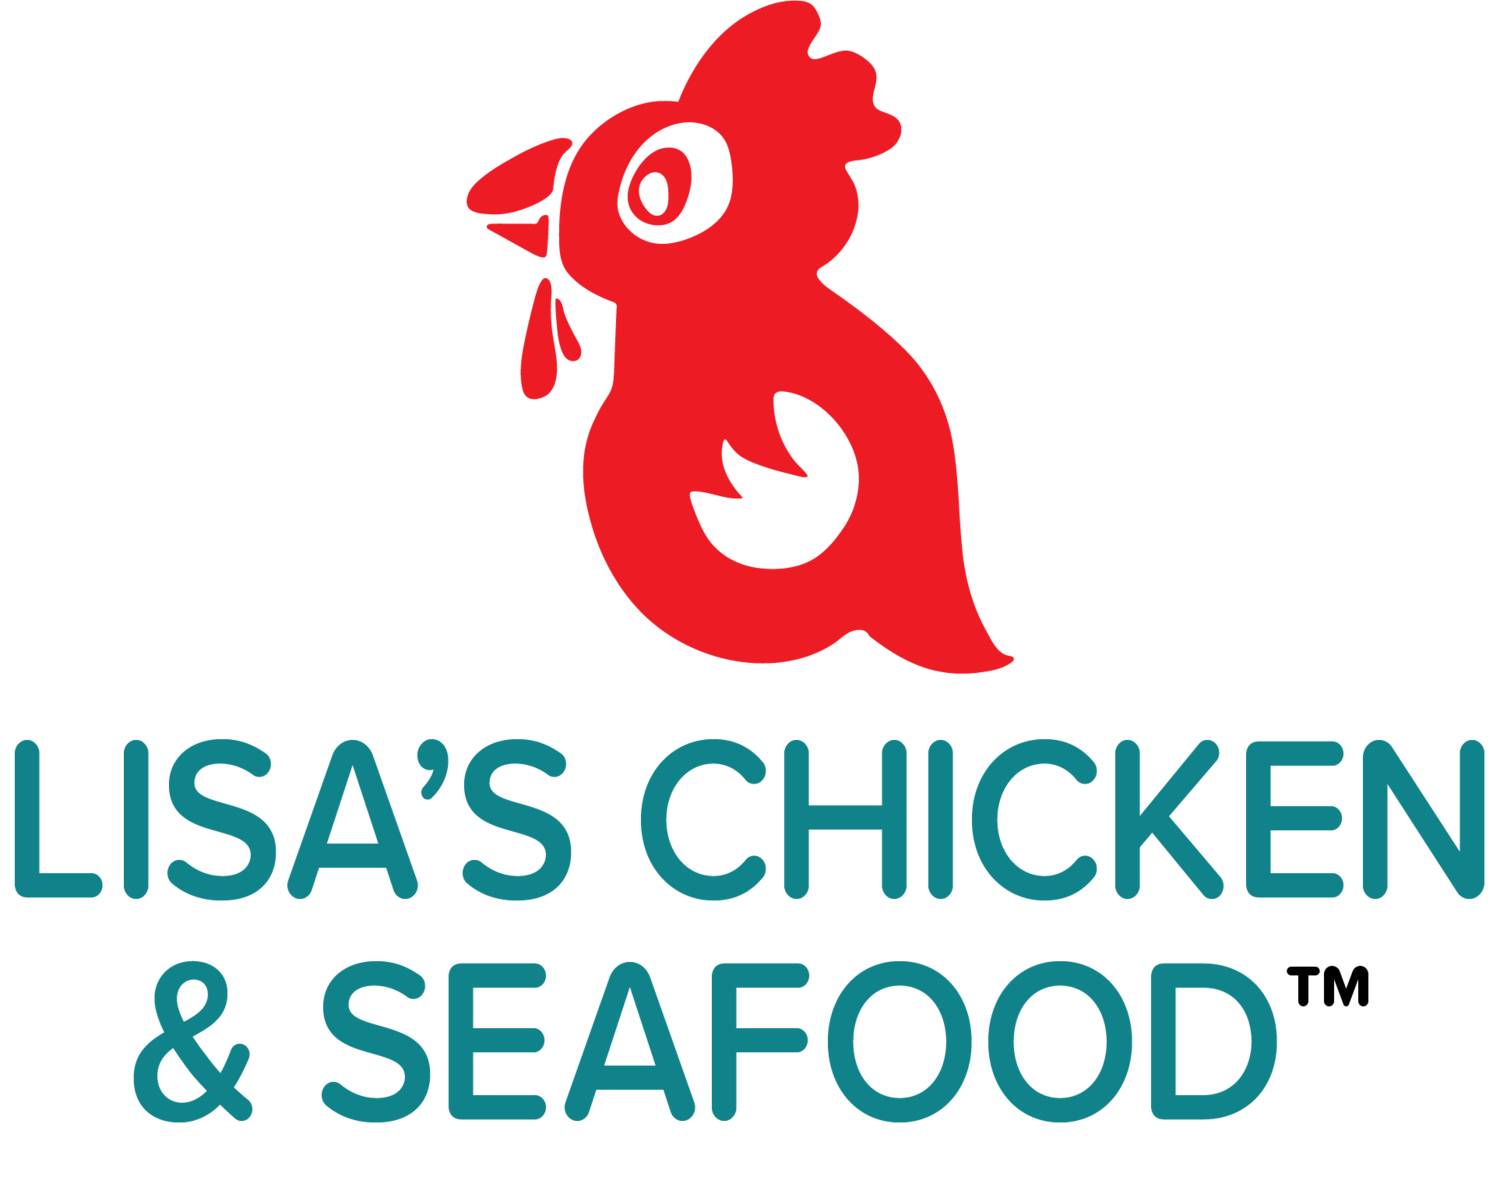 Lisa's Chicken & Seafood